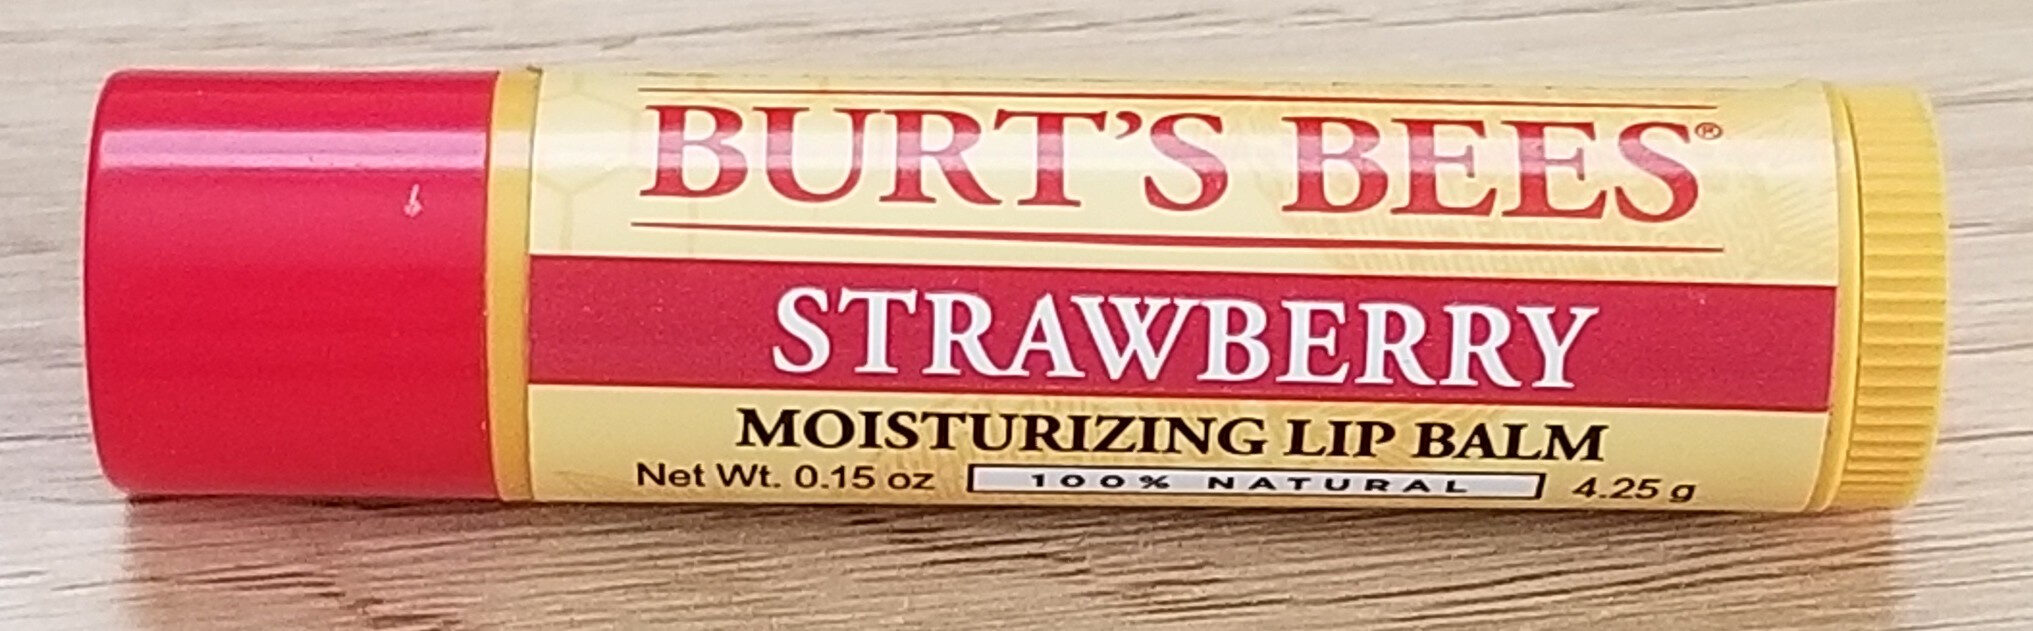 Strawberry Moisturizing Lip Balm - Produkt - en